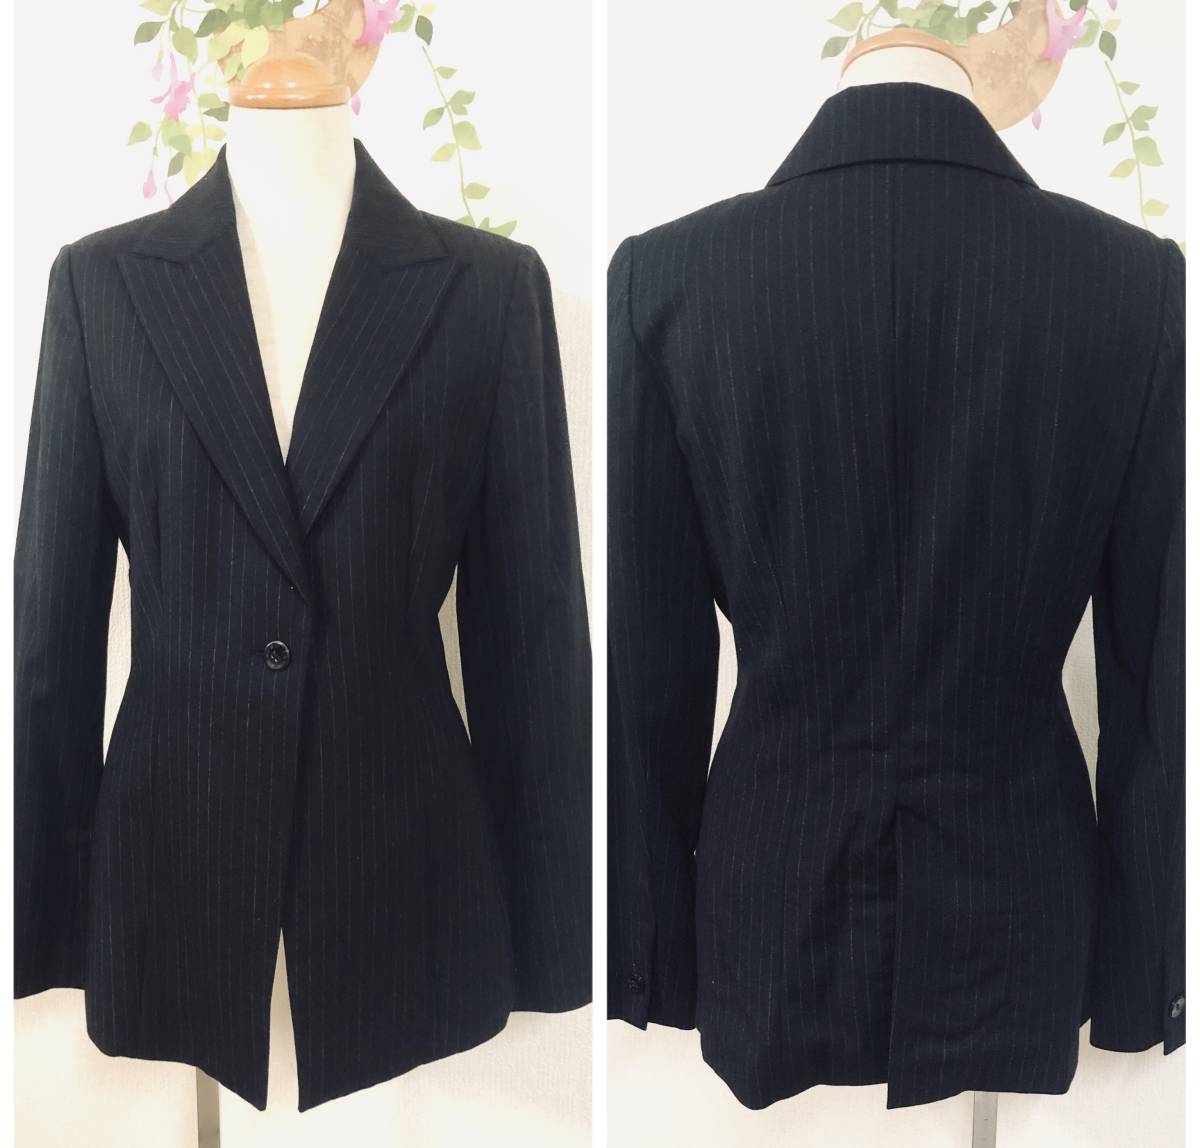 JAYRO Gyro stripe & single jacket black JAYRO button wool 96% size S